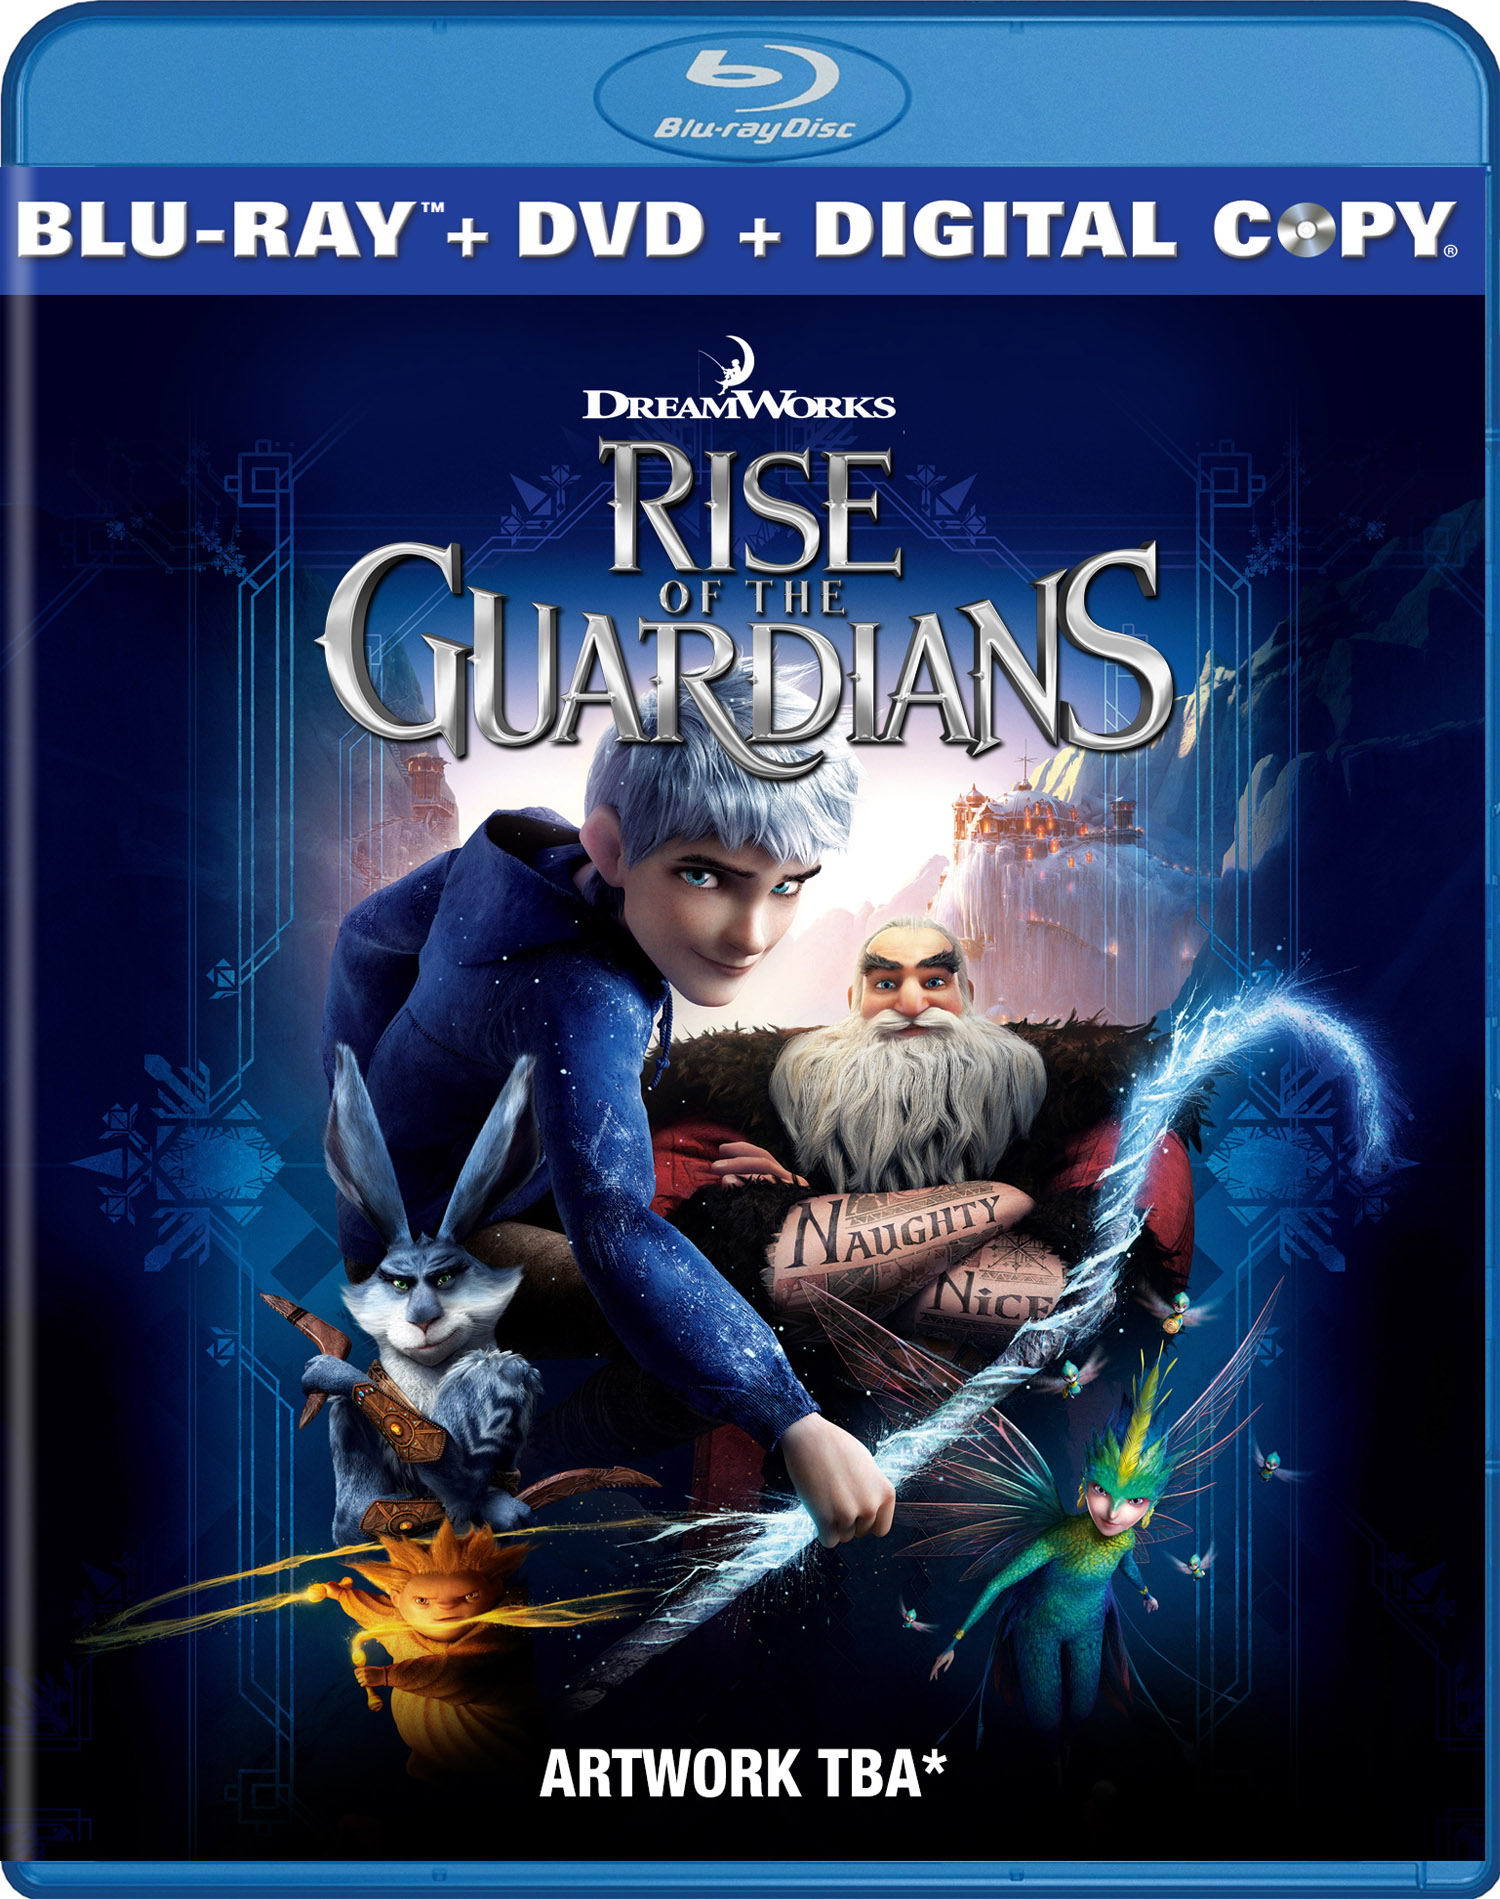 [守护者联盟].Rise.of.the.Guardians.2012.3D.BluRay.1080p.AVC.TrueHD.7.1-LKS   40.39G-1.jpg